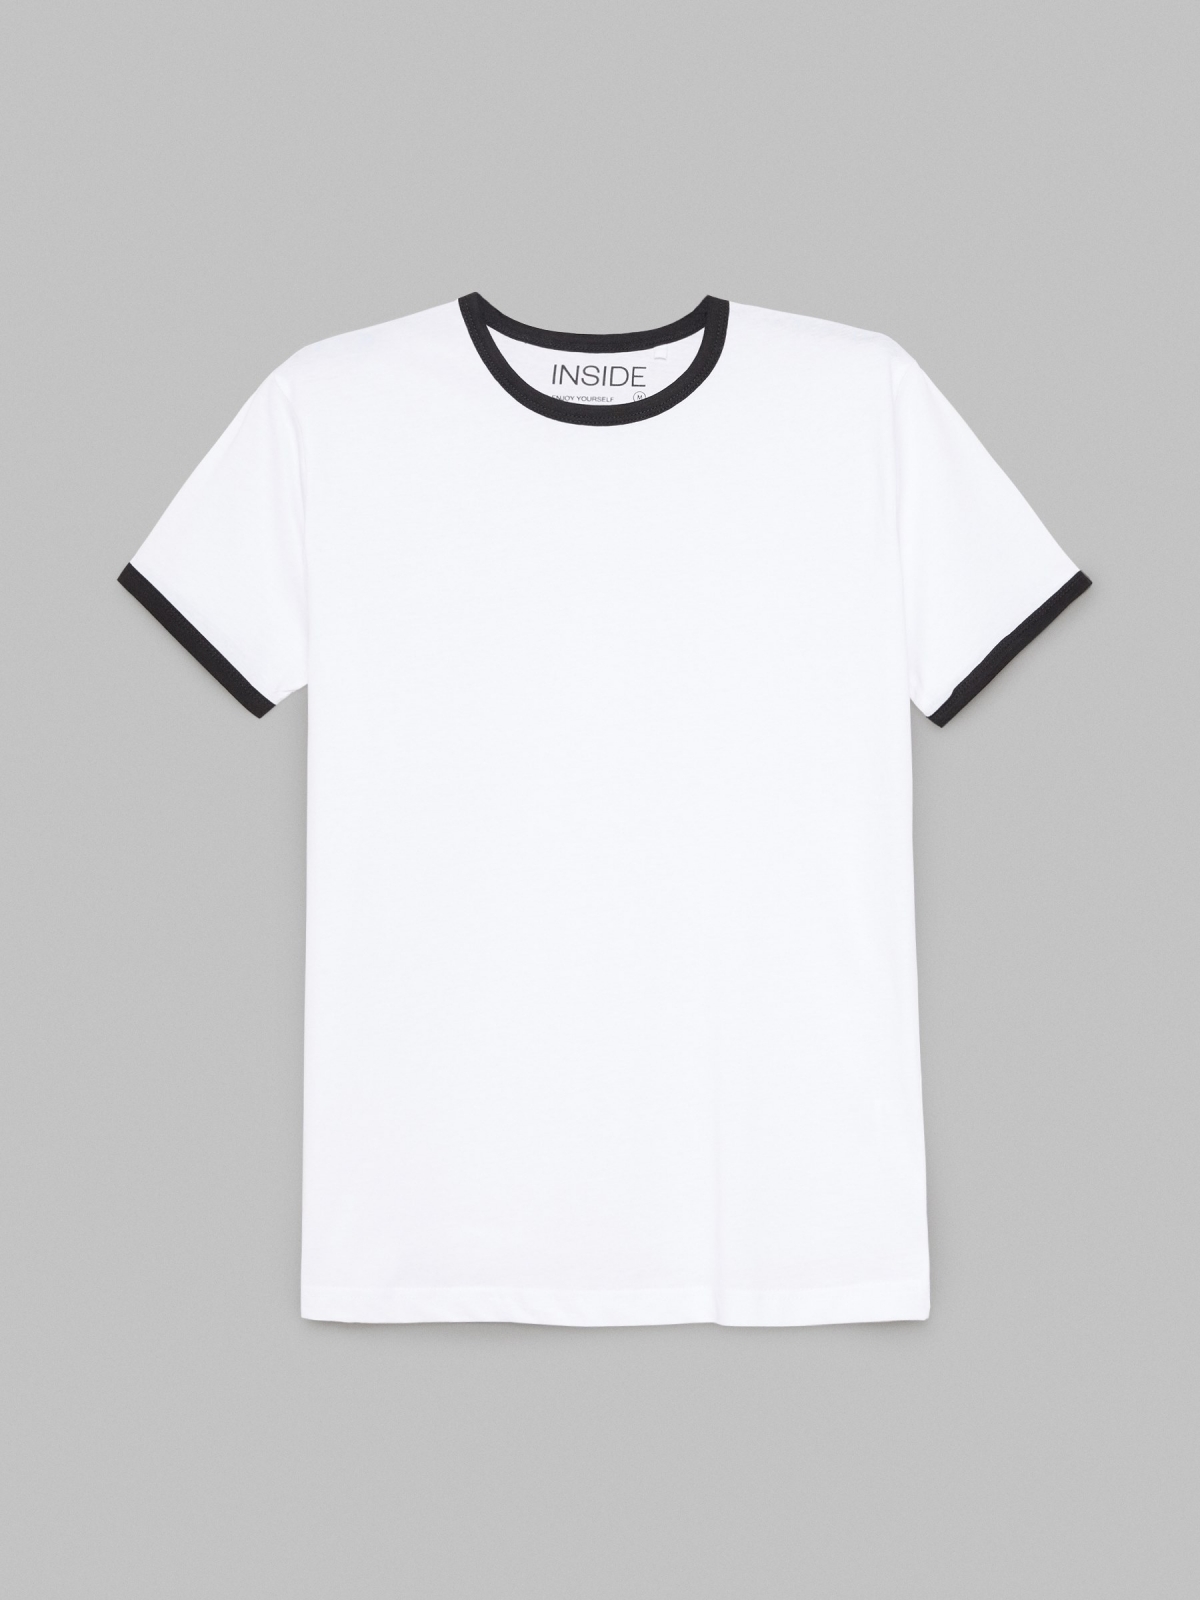  Camiseta básica contrastes blanco